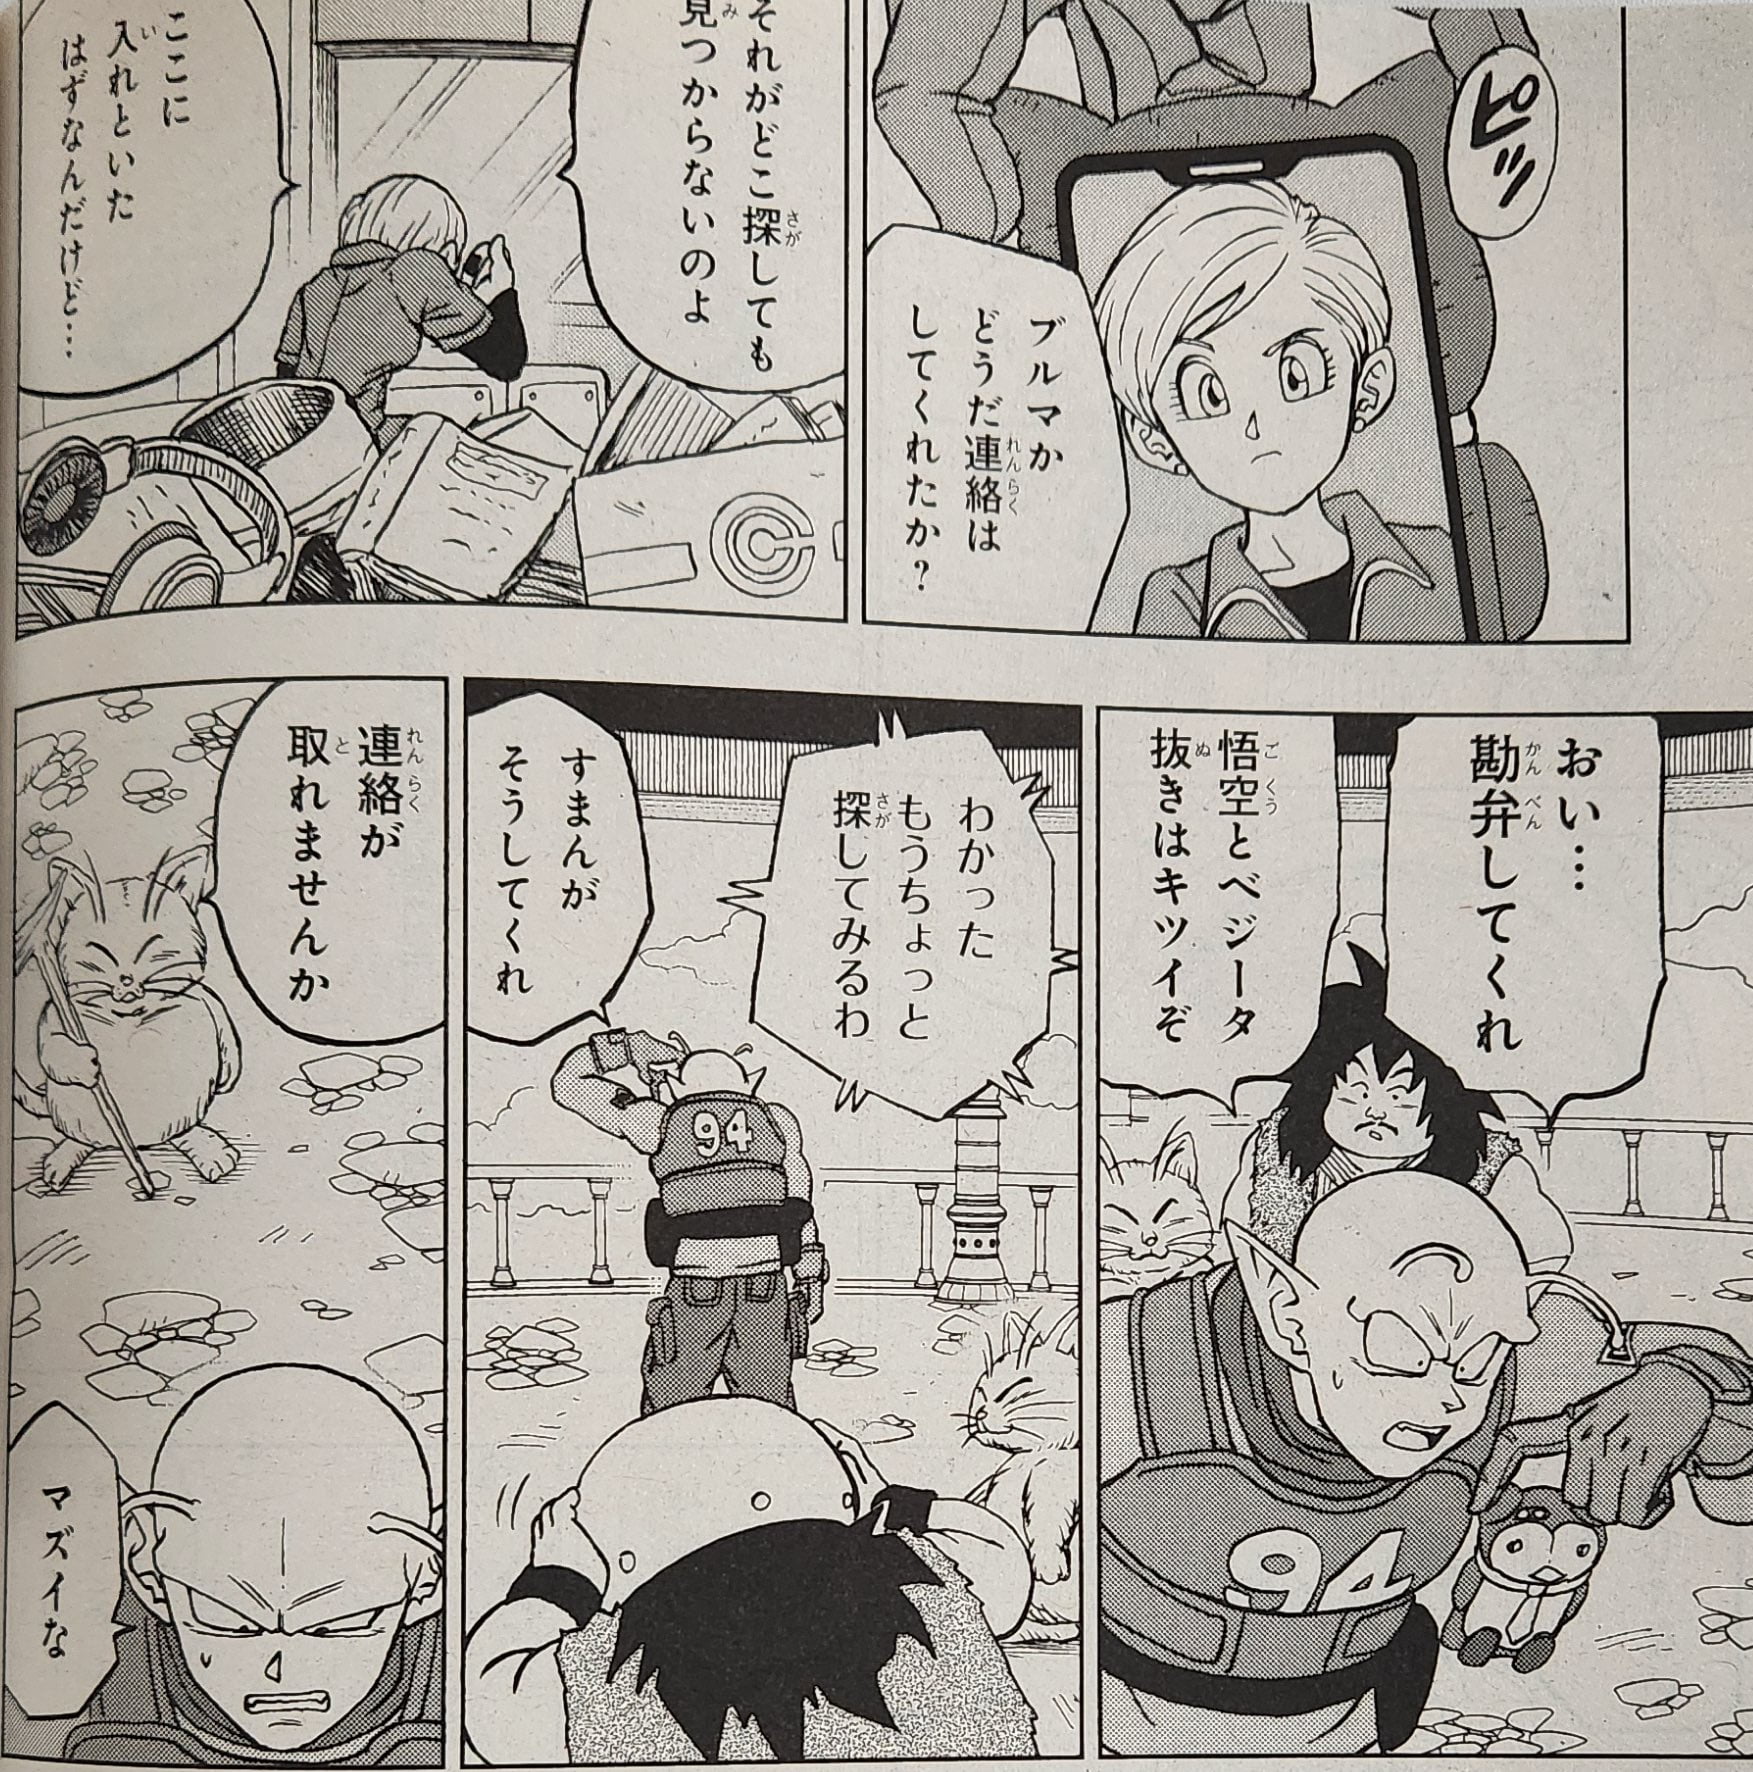 Manga 92 Dragon Ball Super 10